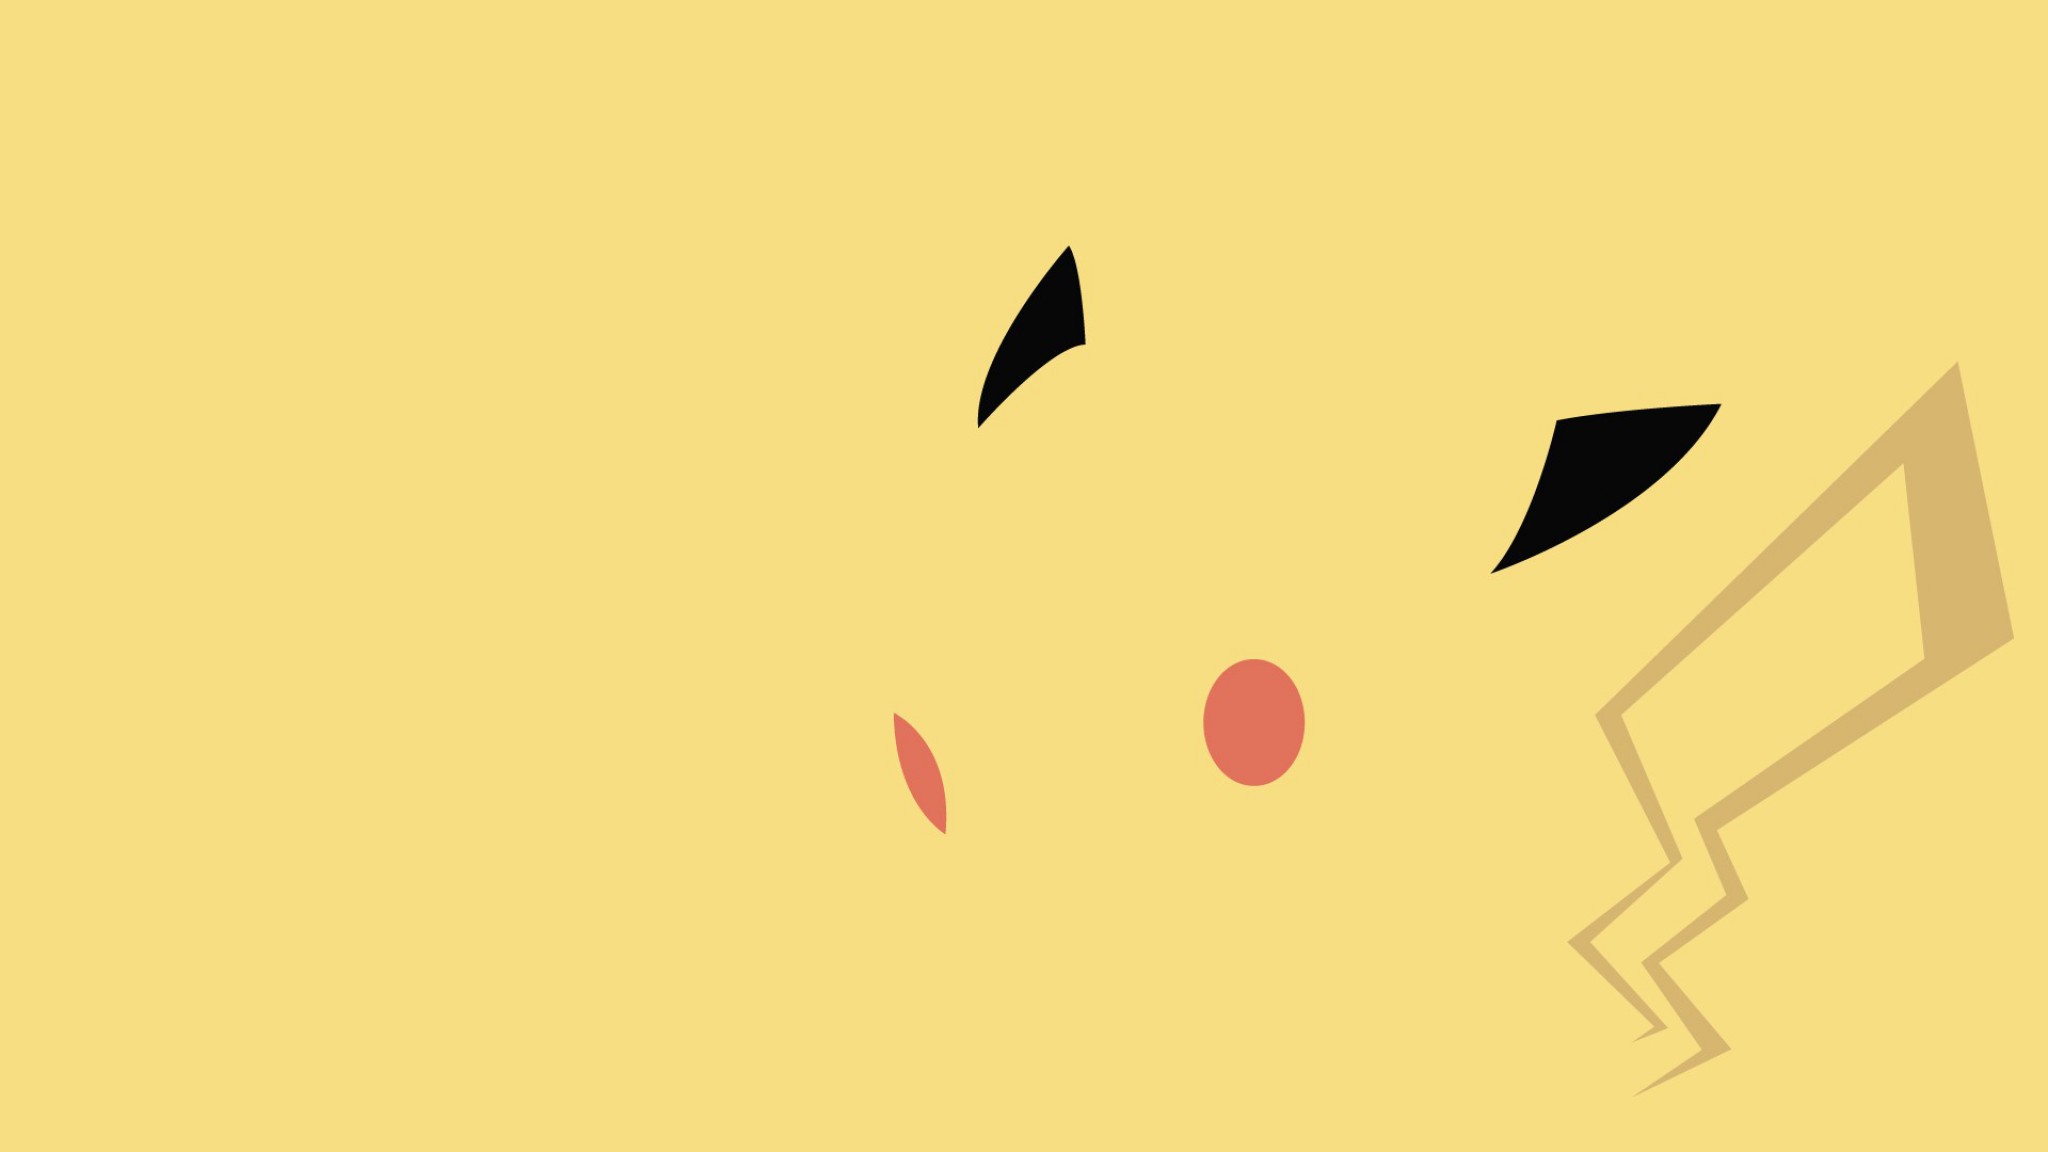 Pikachu Picture Hd - Minimalist Pokemon - HD Wallpaper 